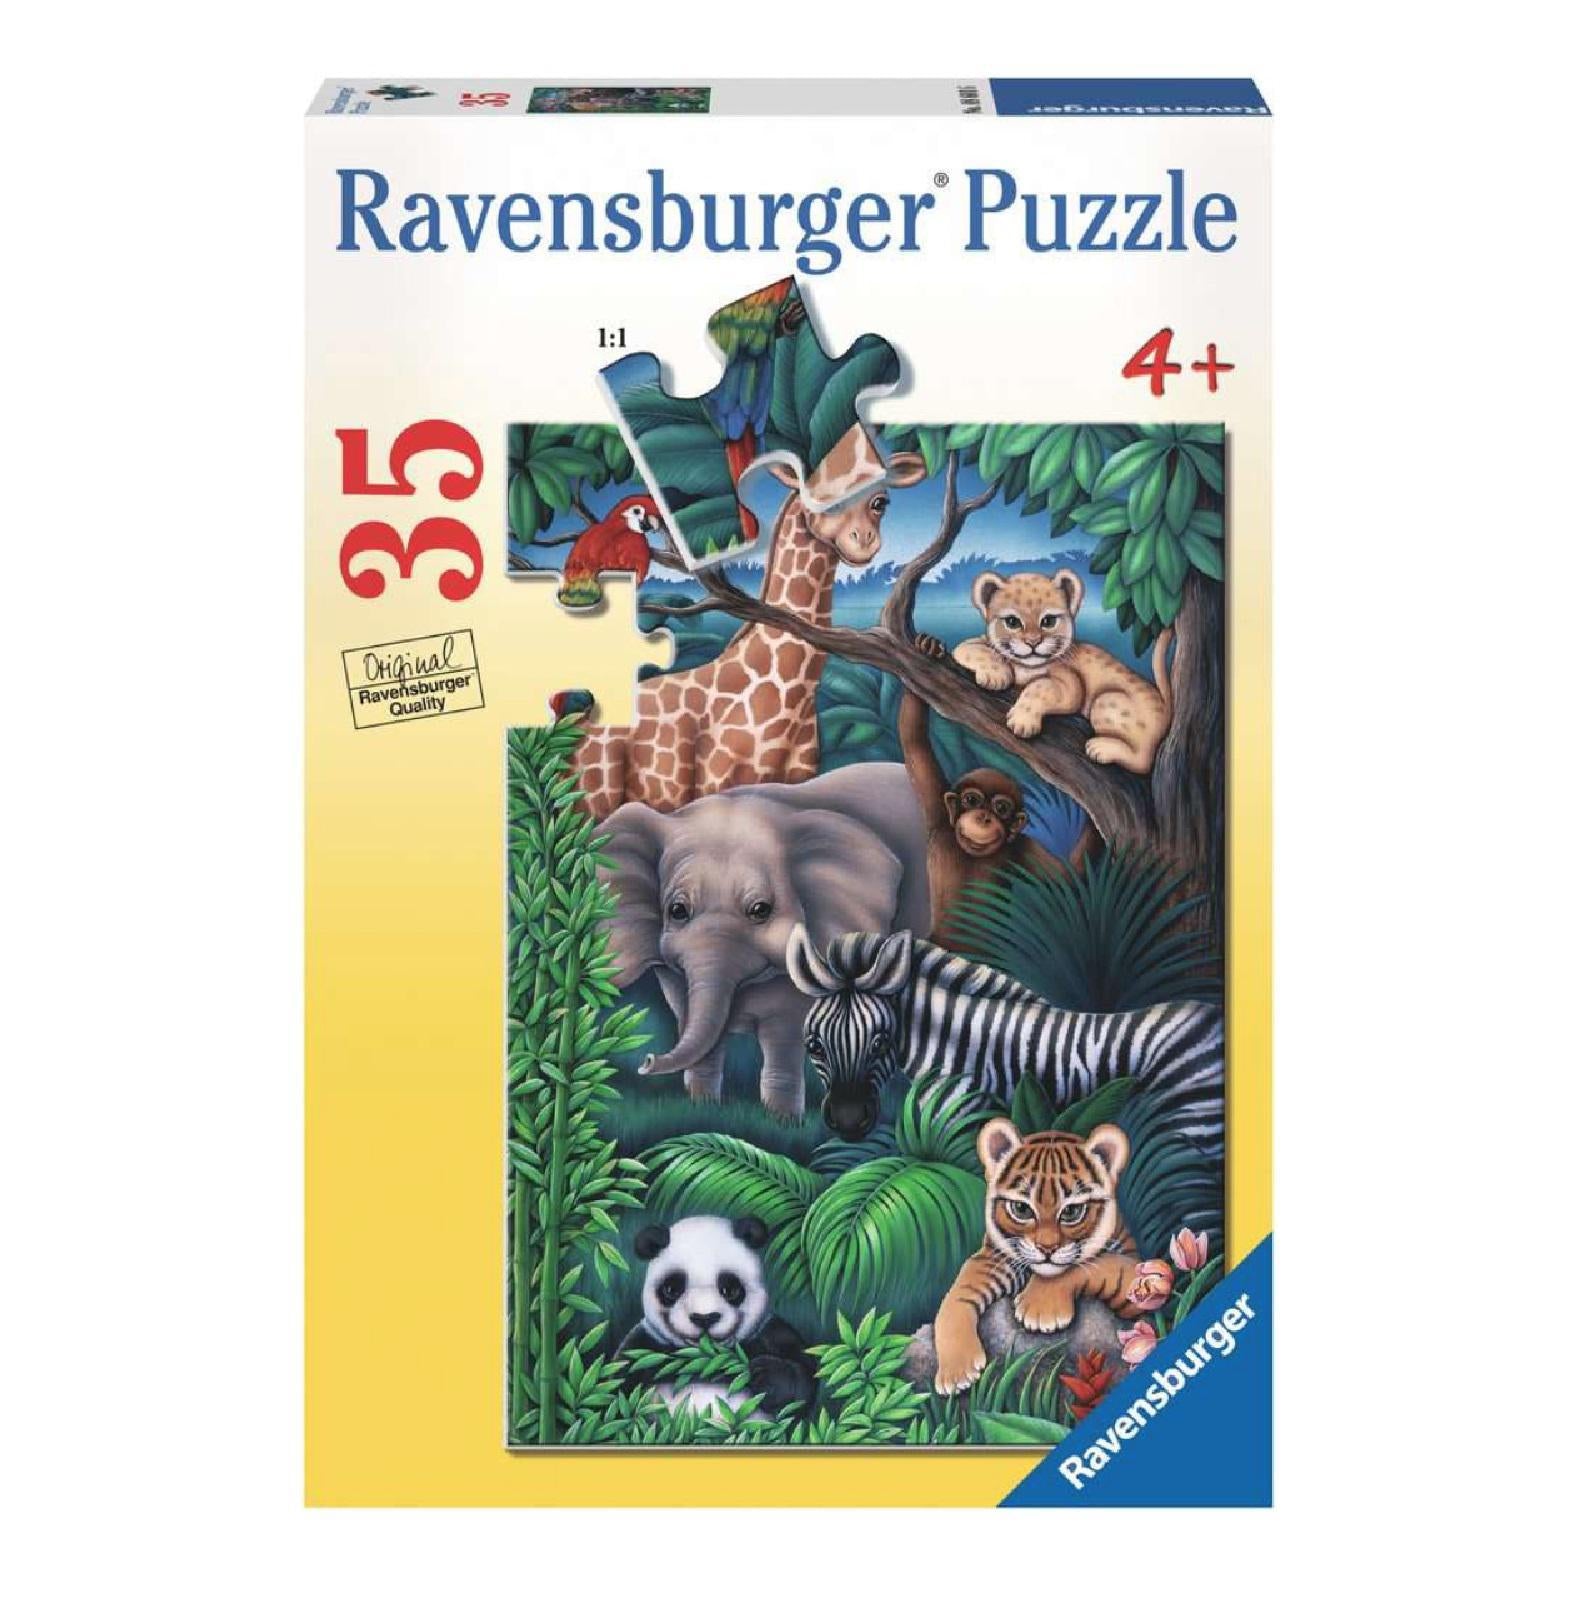 Ravensburger Animal Kingdom Jigsaw Puzzle 